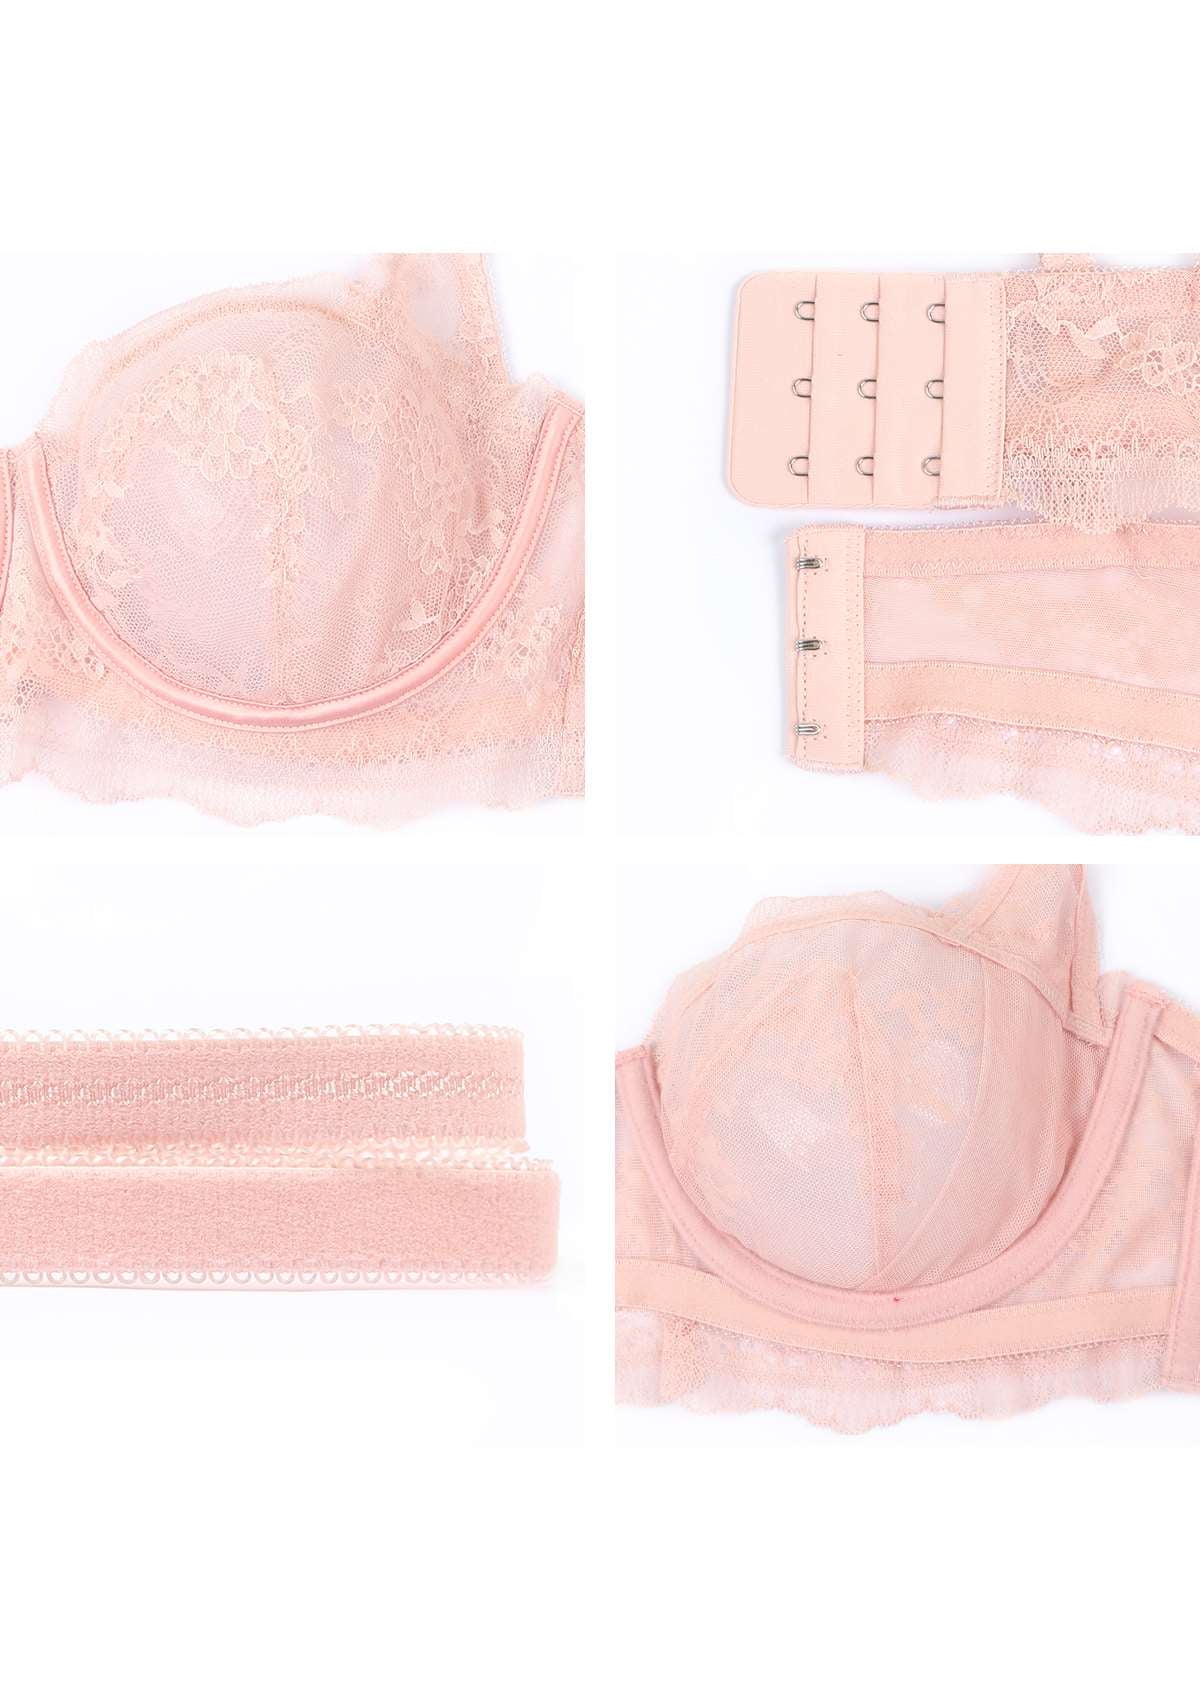 HSIA Floral Lace Unlined Bridal Balconette Delicate Bra Panty Set - Pink / 34 / D